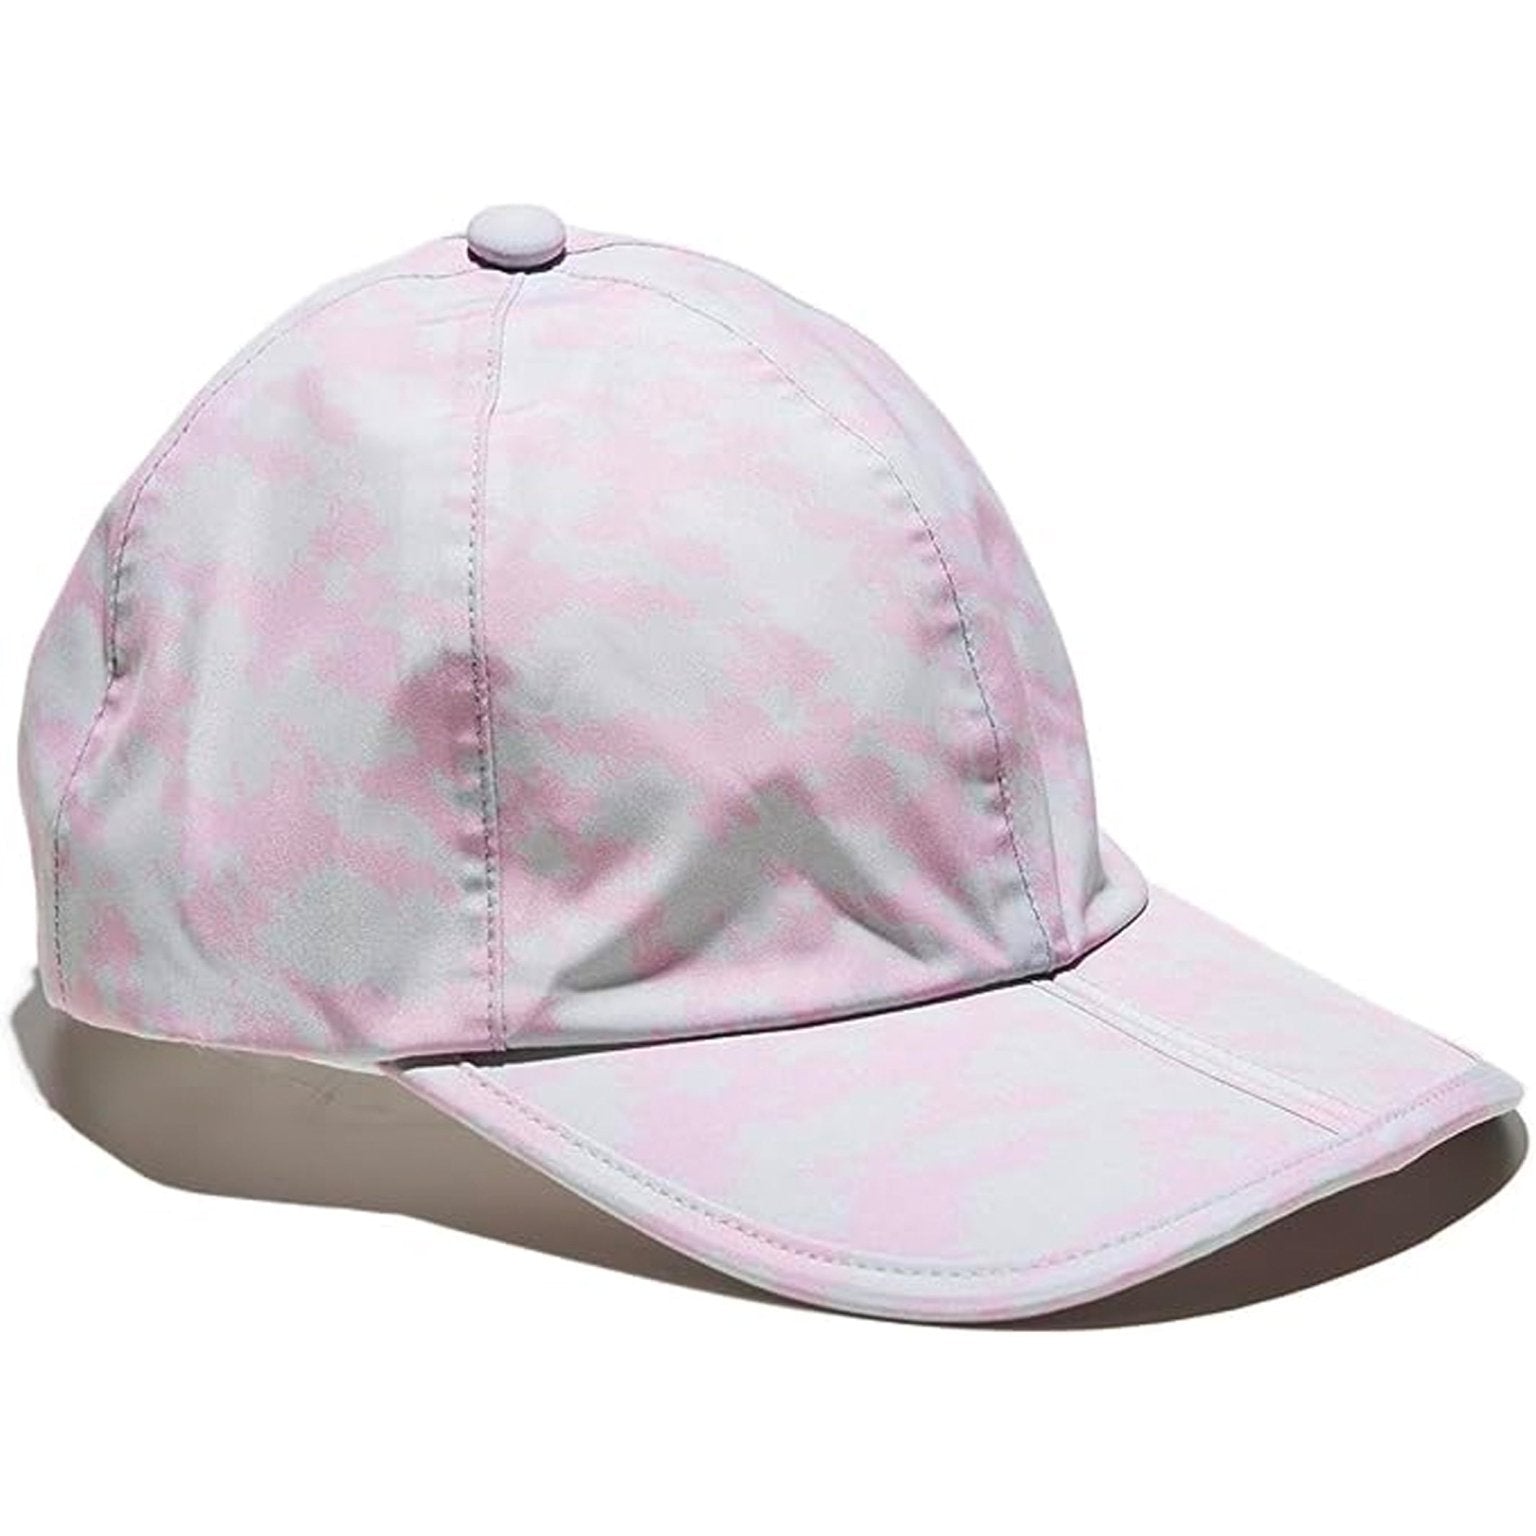 4elementsclothingSealSkinzSealskinz - Waterproof Windproof Fold Hat / Salle Peaked Cap / Baseball cap / Folding Peak Hat pinkHats13200038009500